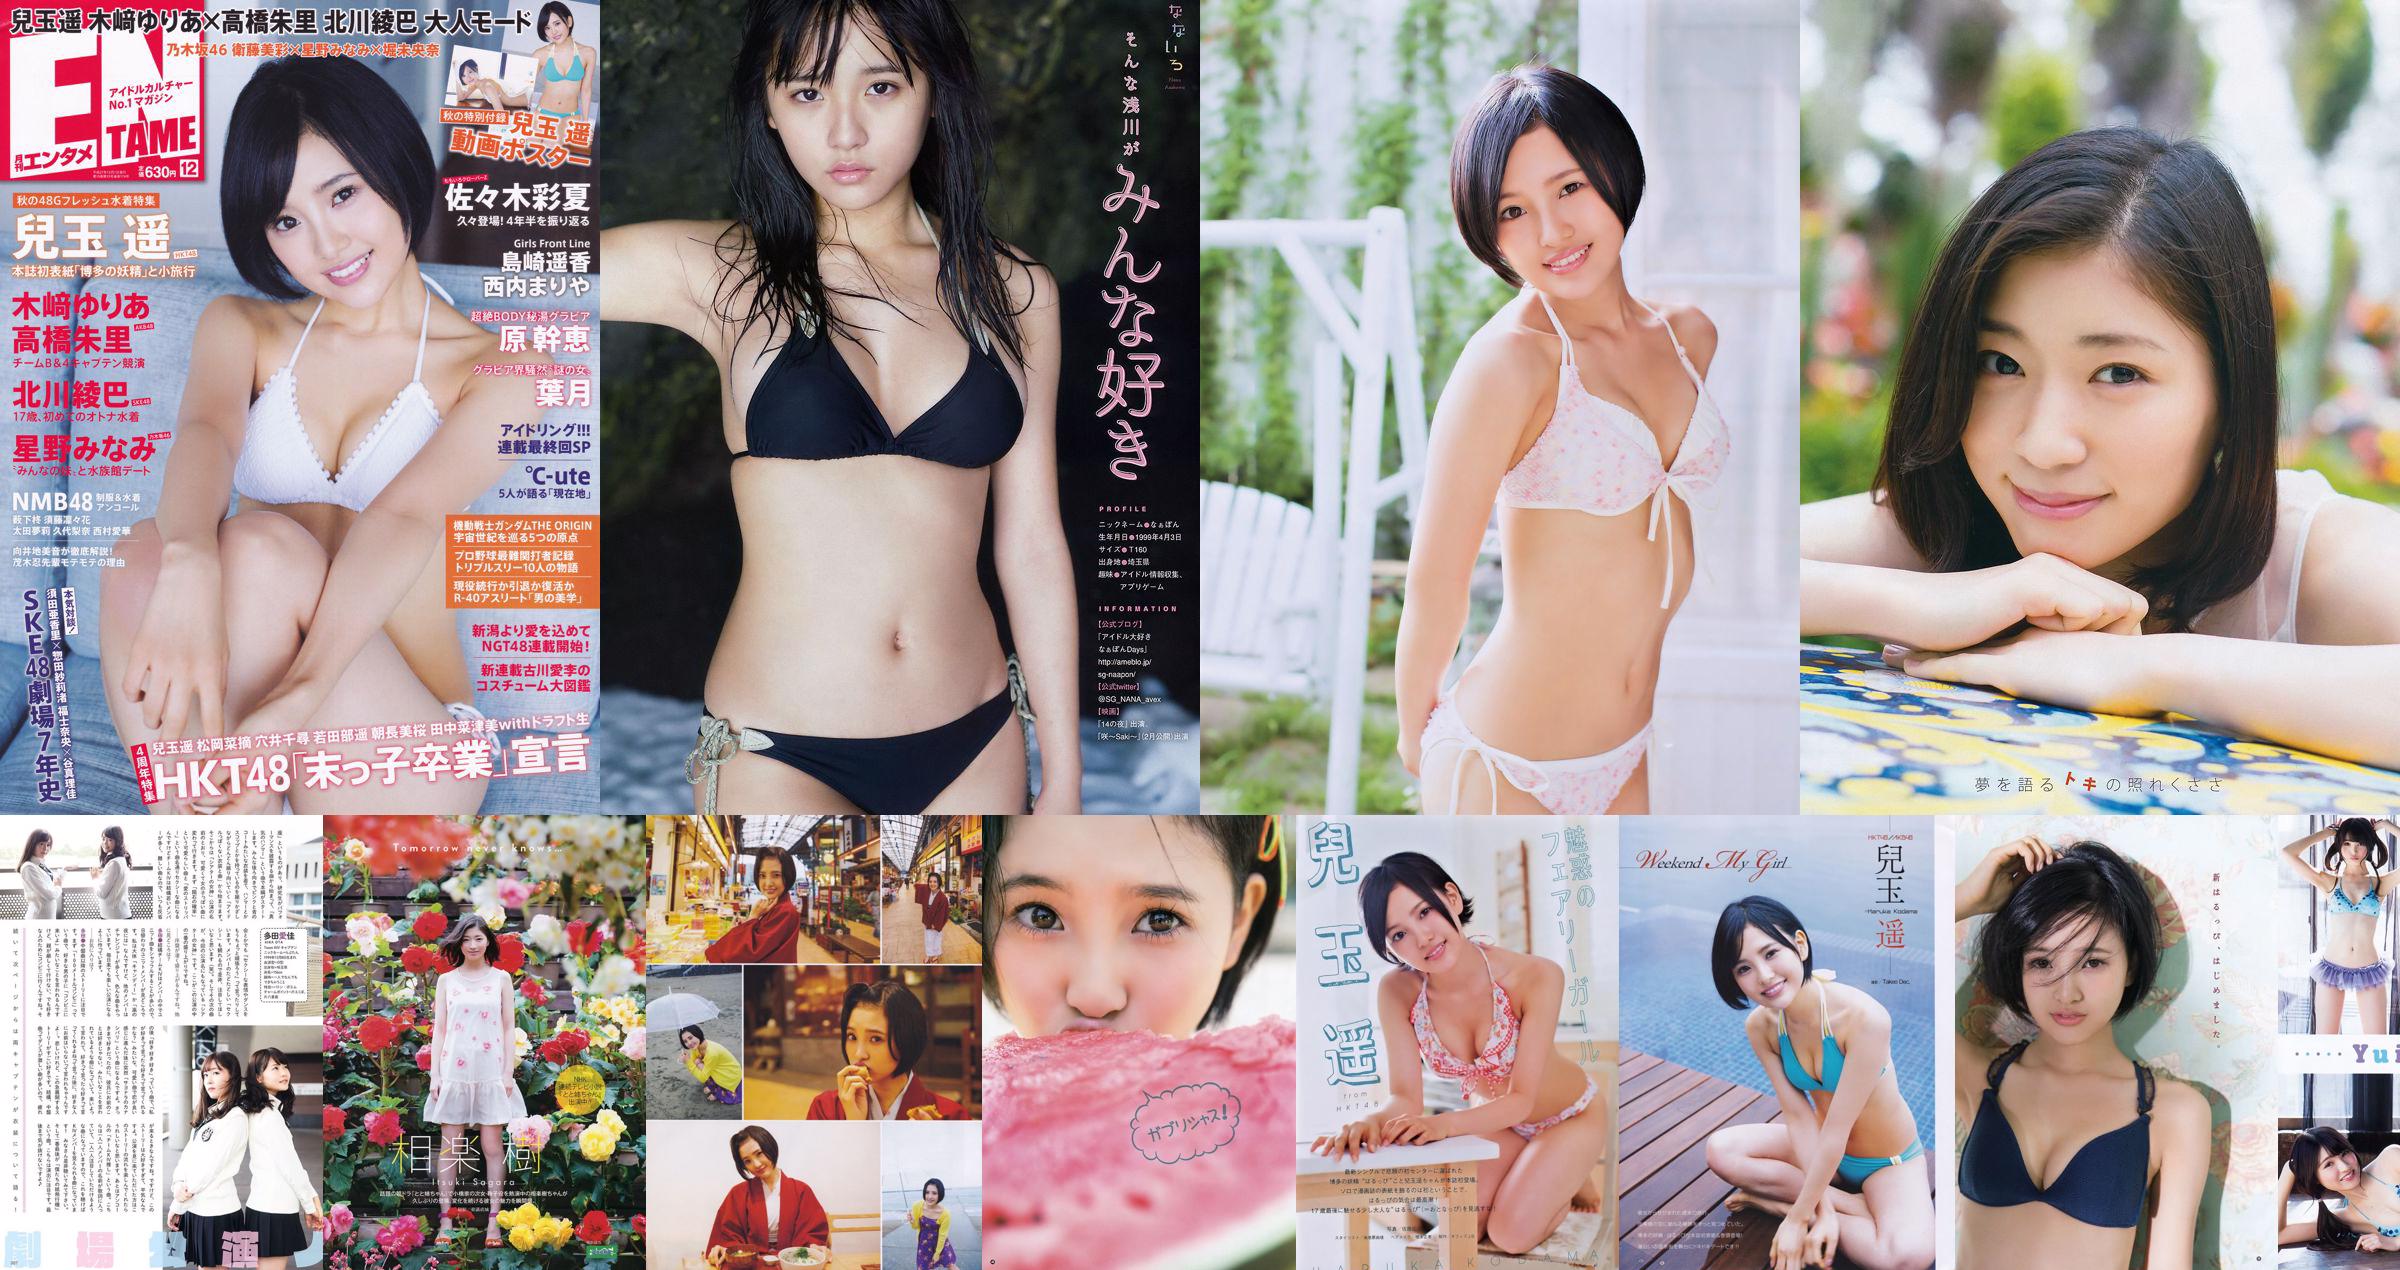 [Młody Gangan] Haruka Kodama Rion 2015 nr 23 Photo Magazine No.41eae8 Strona 1